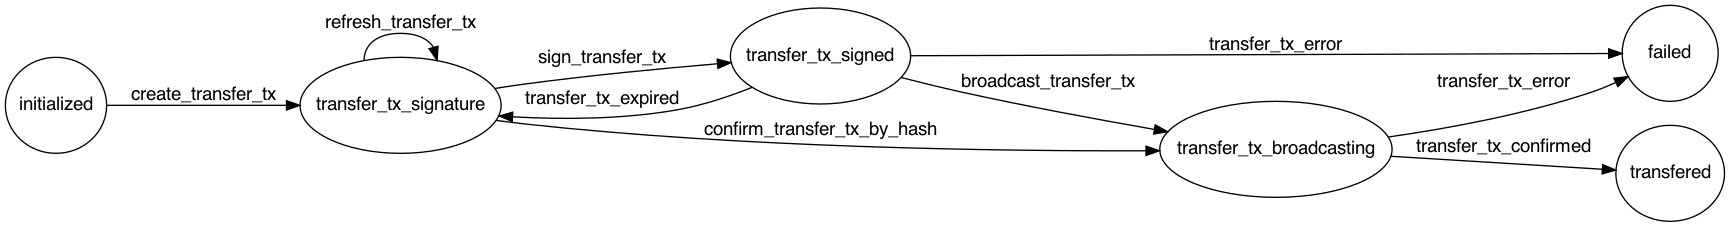 Polkadot Transfer Flow Diagram